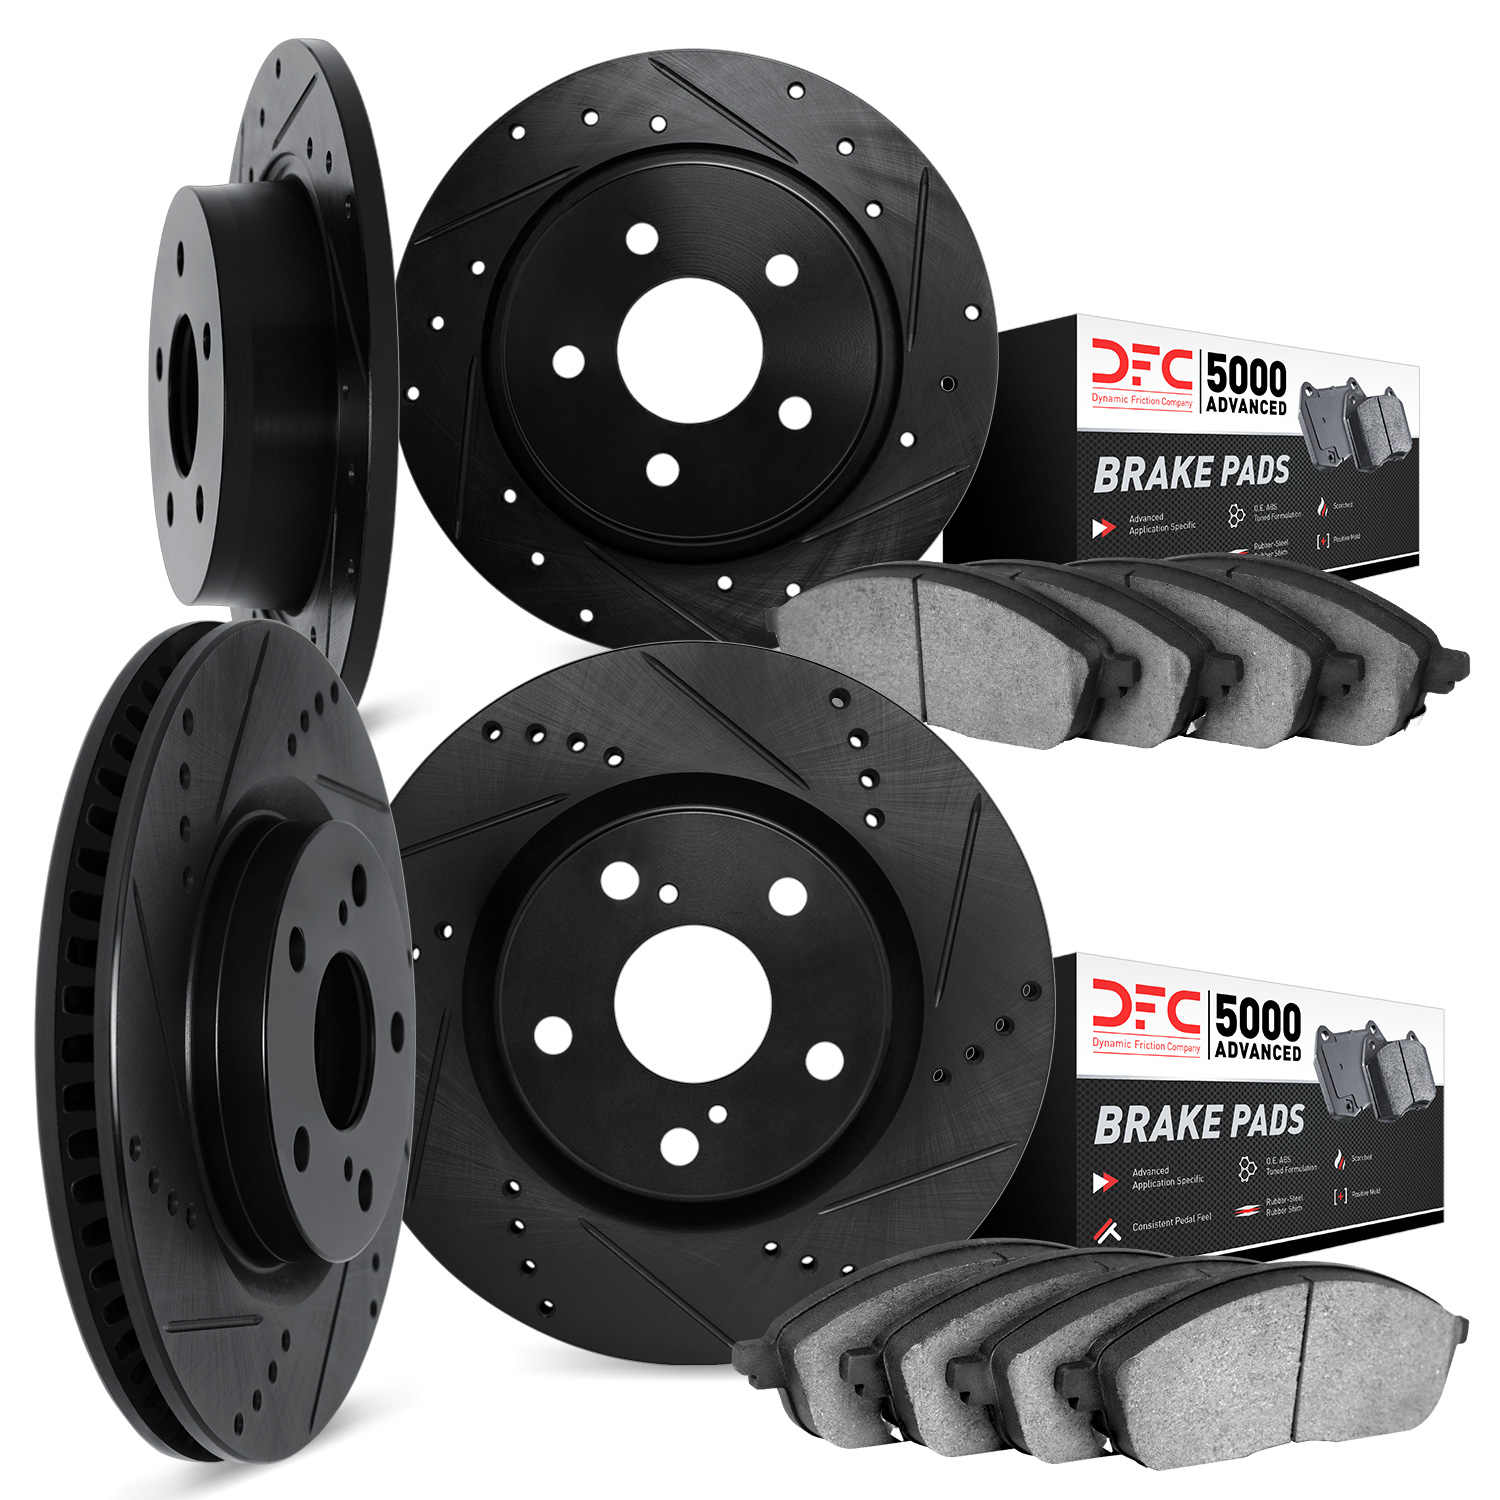 8504-54292 Drilled/Slotted Brake Rotors w/5000 Advanced Brake Pads Kit [Black], 2013-2020 Ford/Lincoln/Mercury/Mazda, Position: